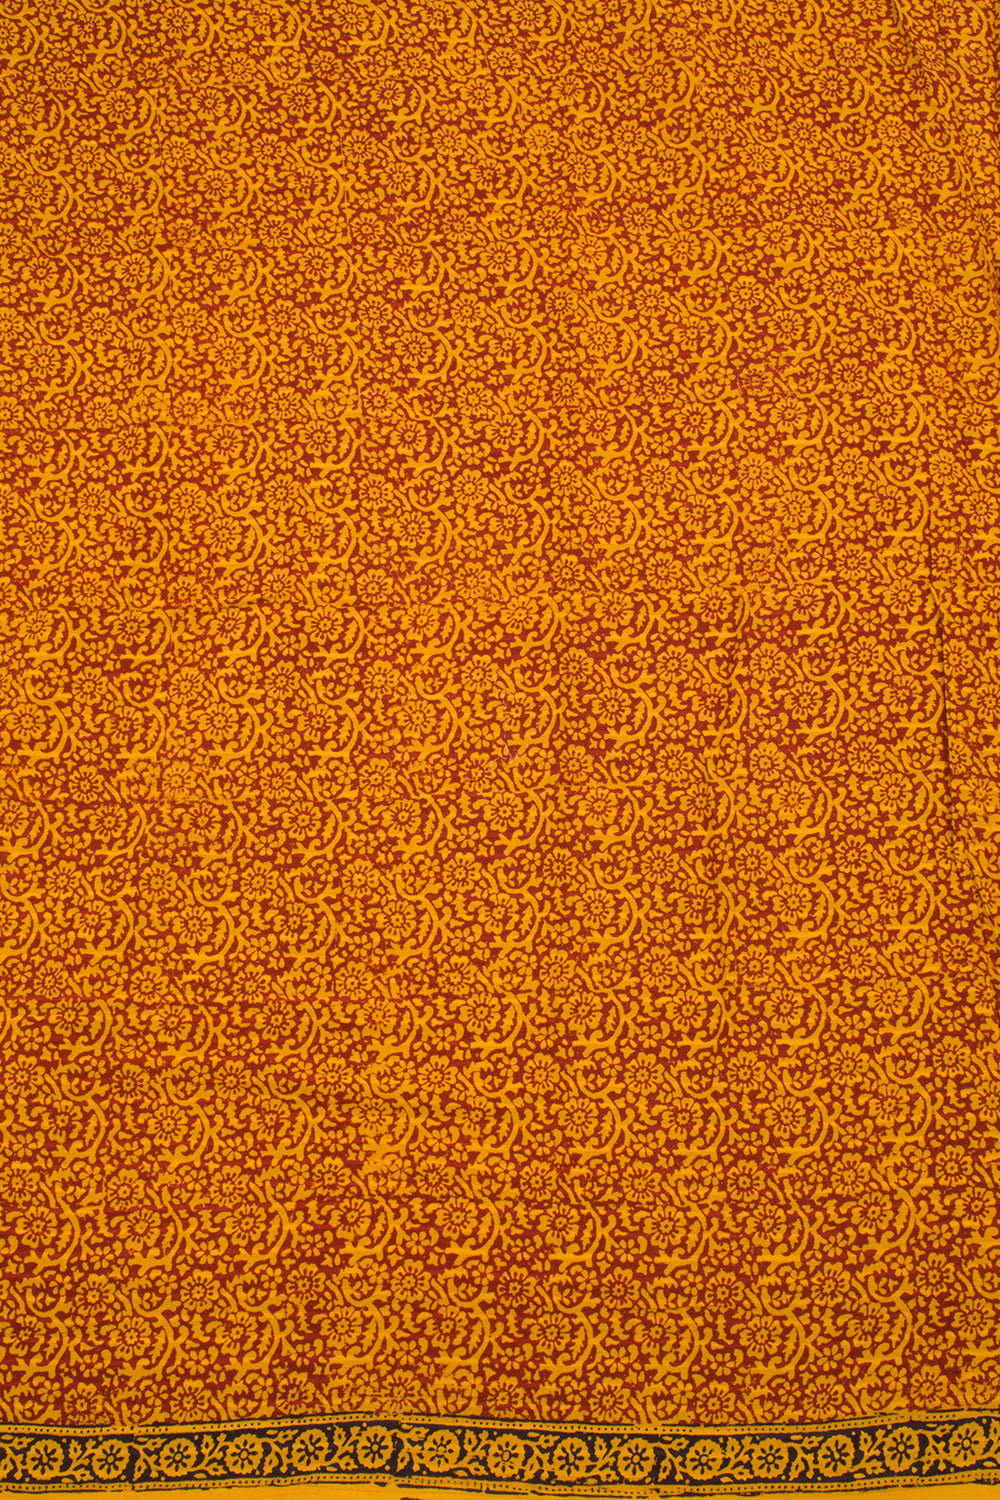 Yellow Bagh Printed Cotton 3-Piece Salwar Suit Material 10063567